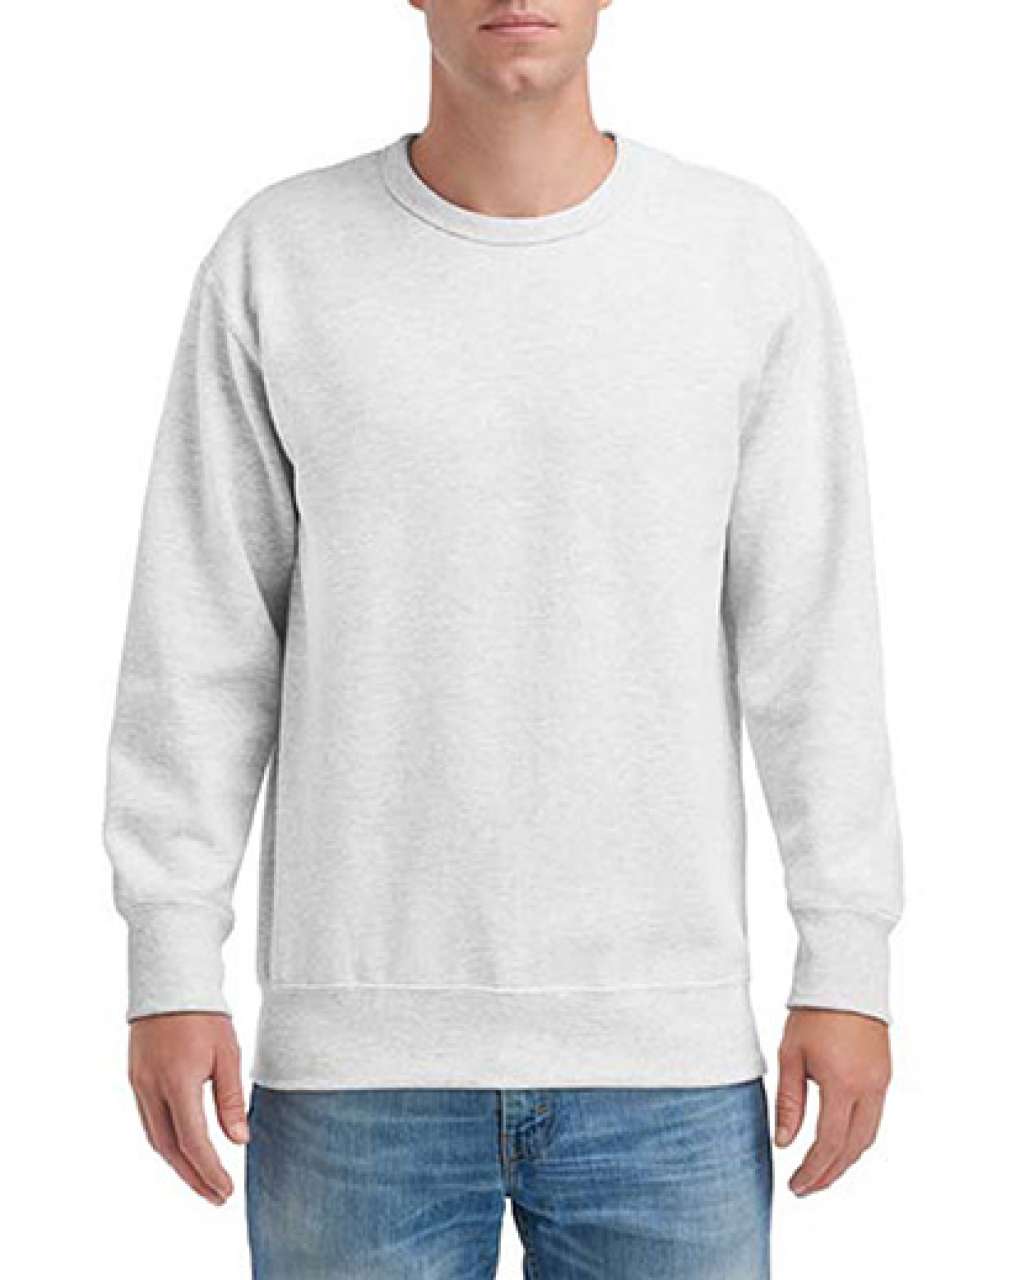 Gildan Herren Sweatshirt Sweat Pullover Sweater Pulli Pullover